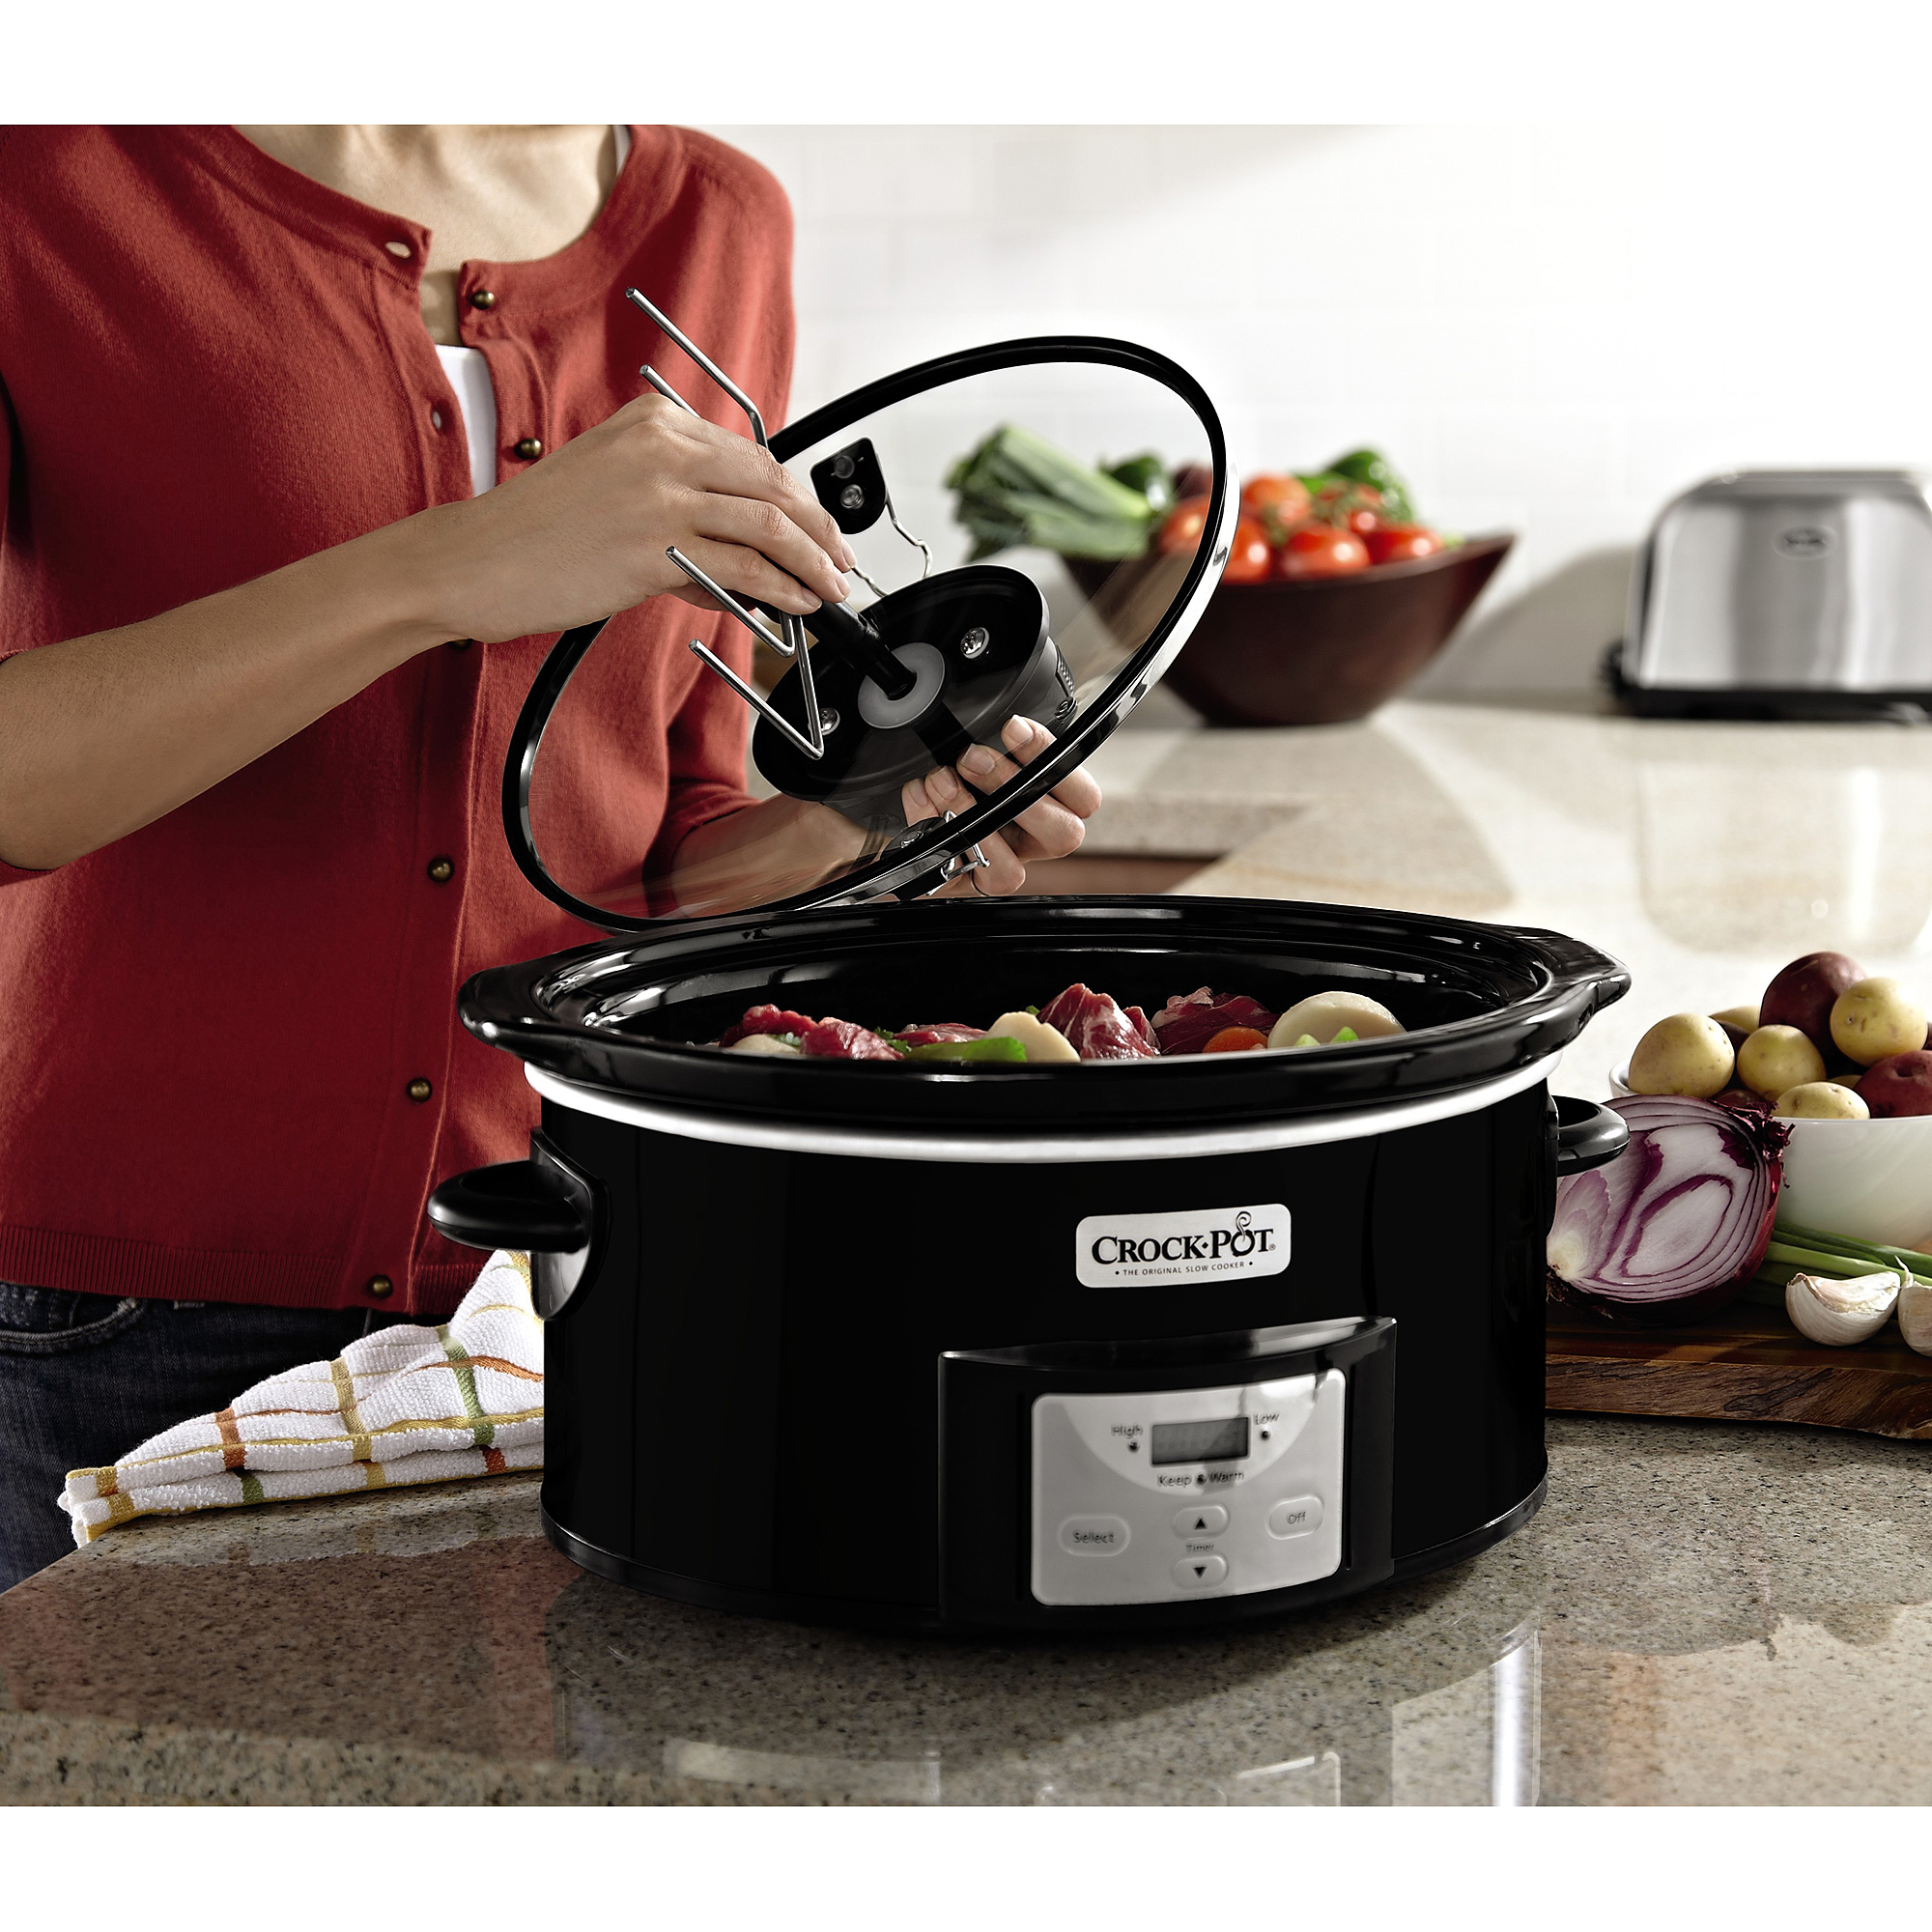 Crock-Pot Stir Automatic Stirring Slow Cooker, 6-Quart, Black - image 4 of 8